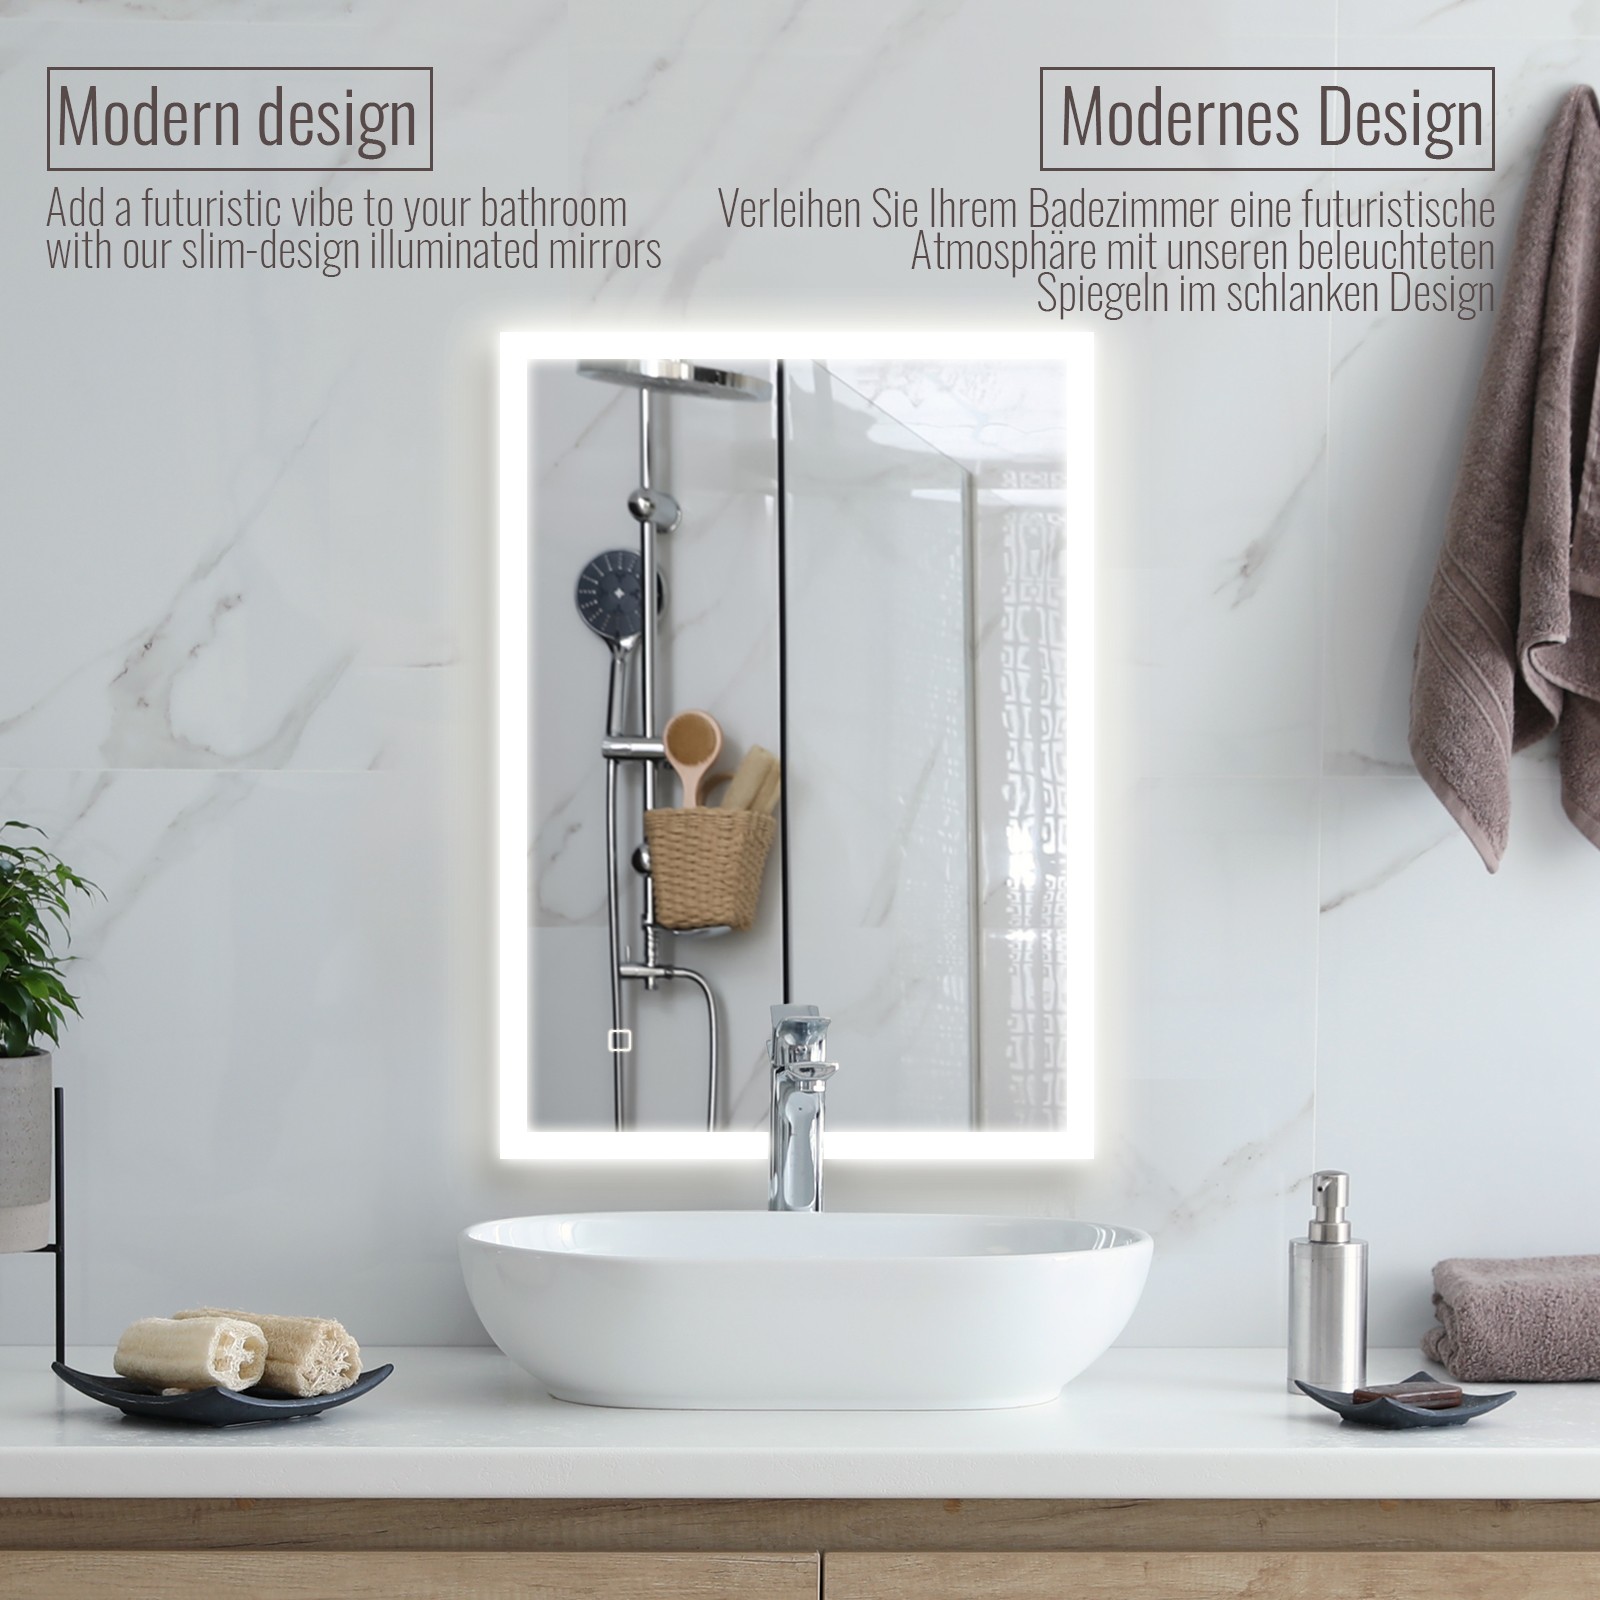 Espejo de baño bluetooth con luz LED 80x60cm antivaho + Dimmable +